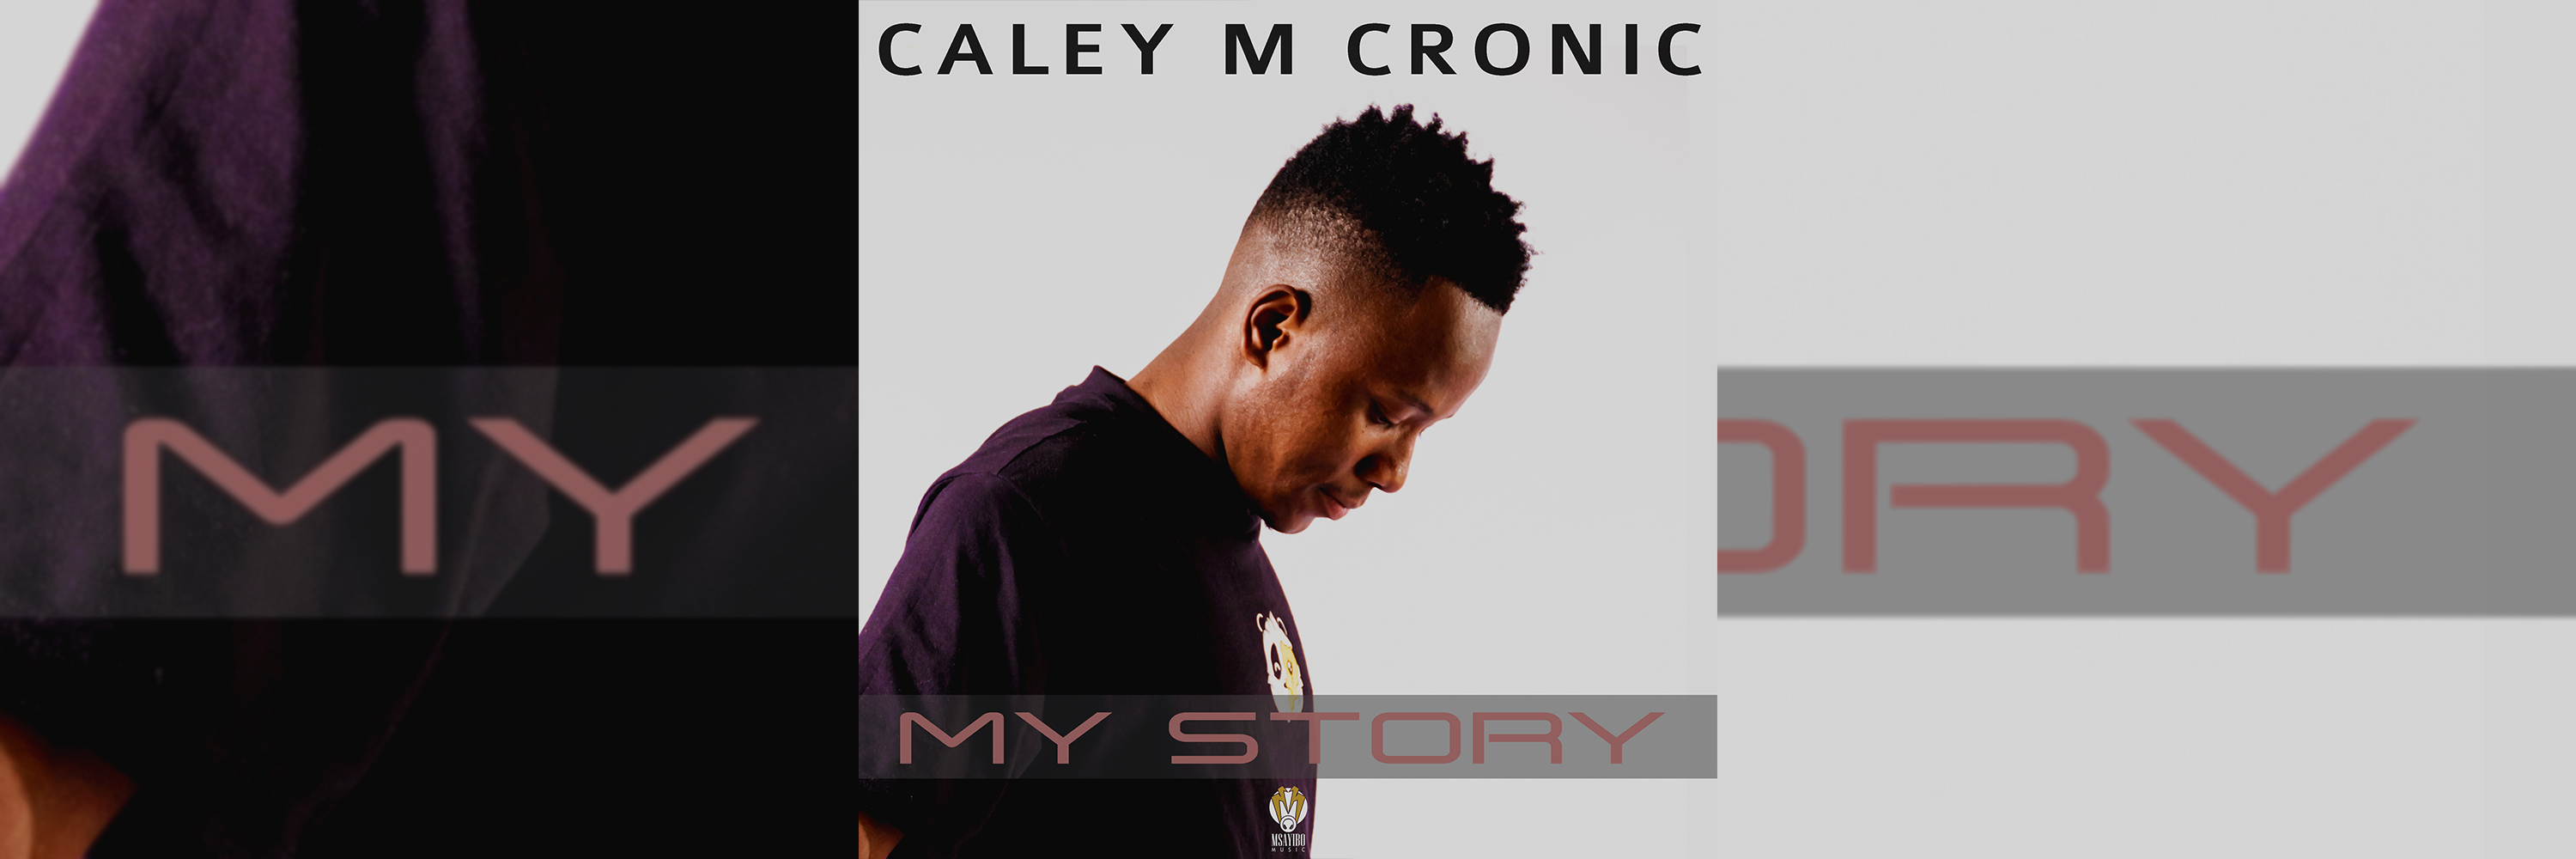 Caley M Cronic - My Story EP [Slider]